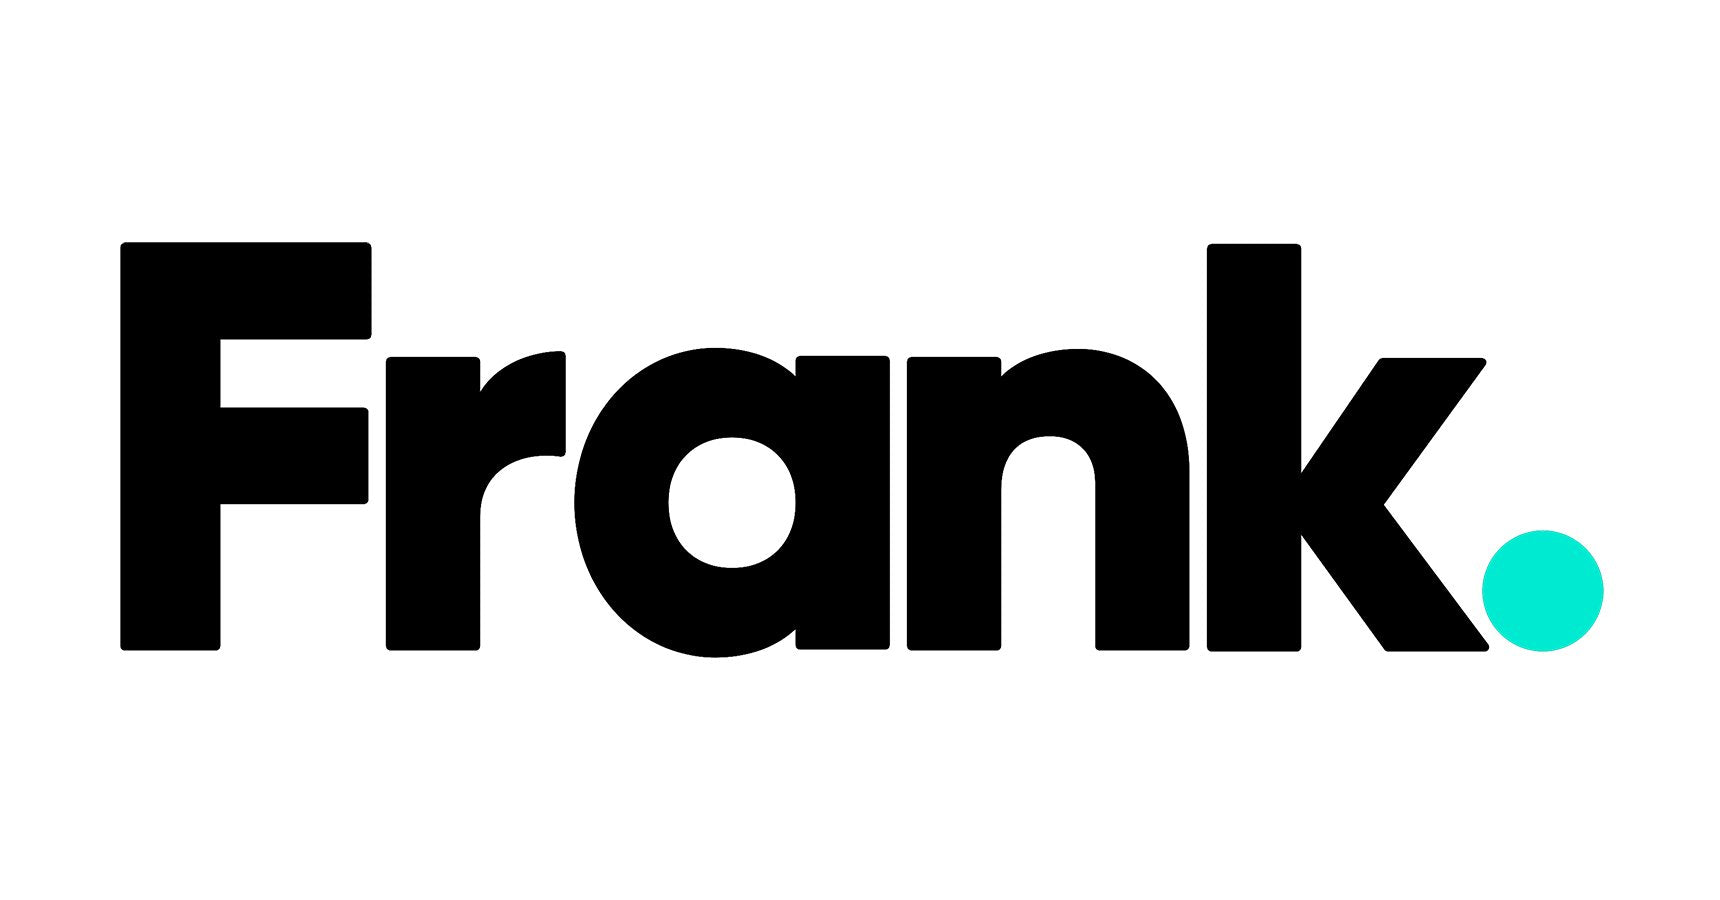 Frank Mobile